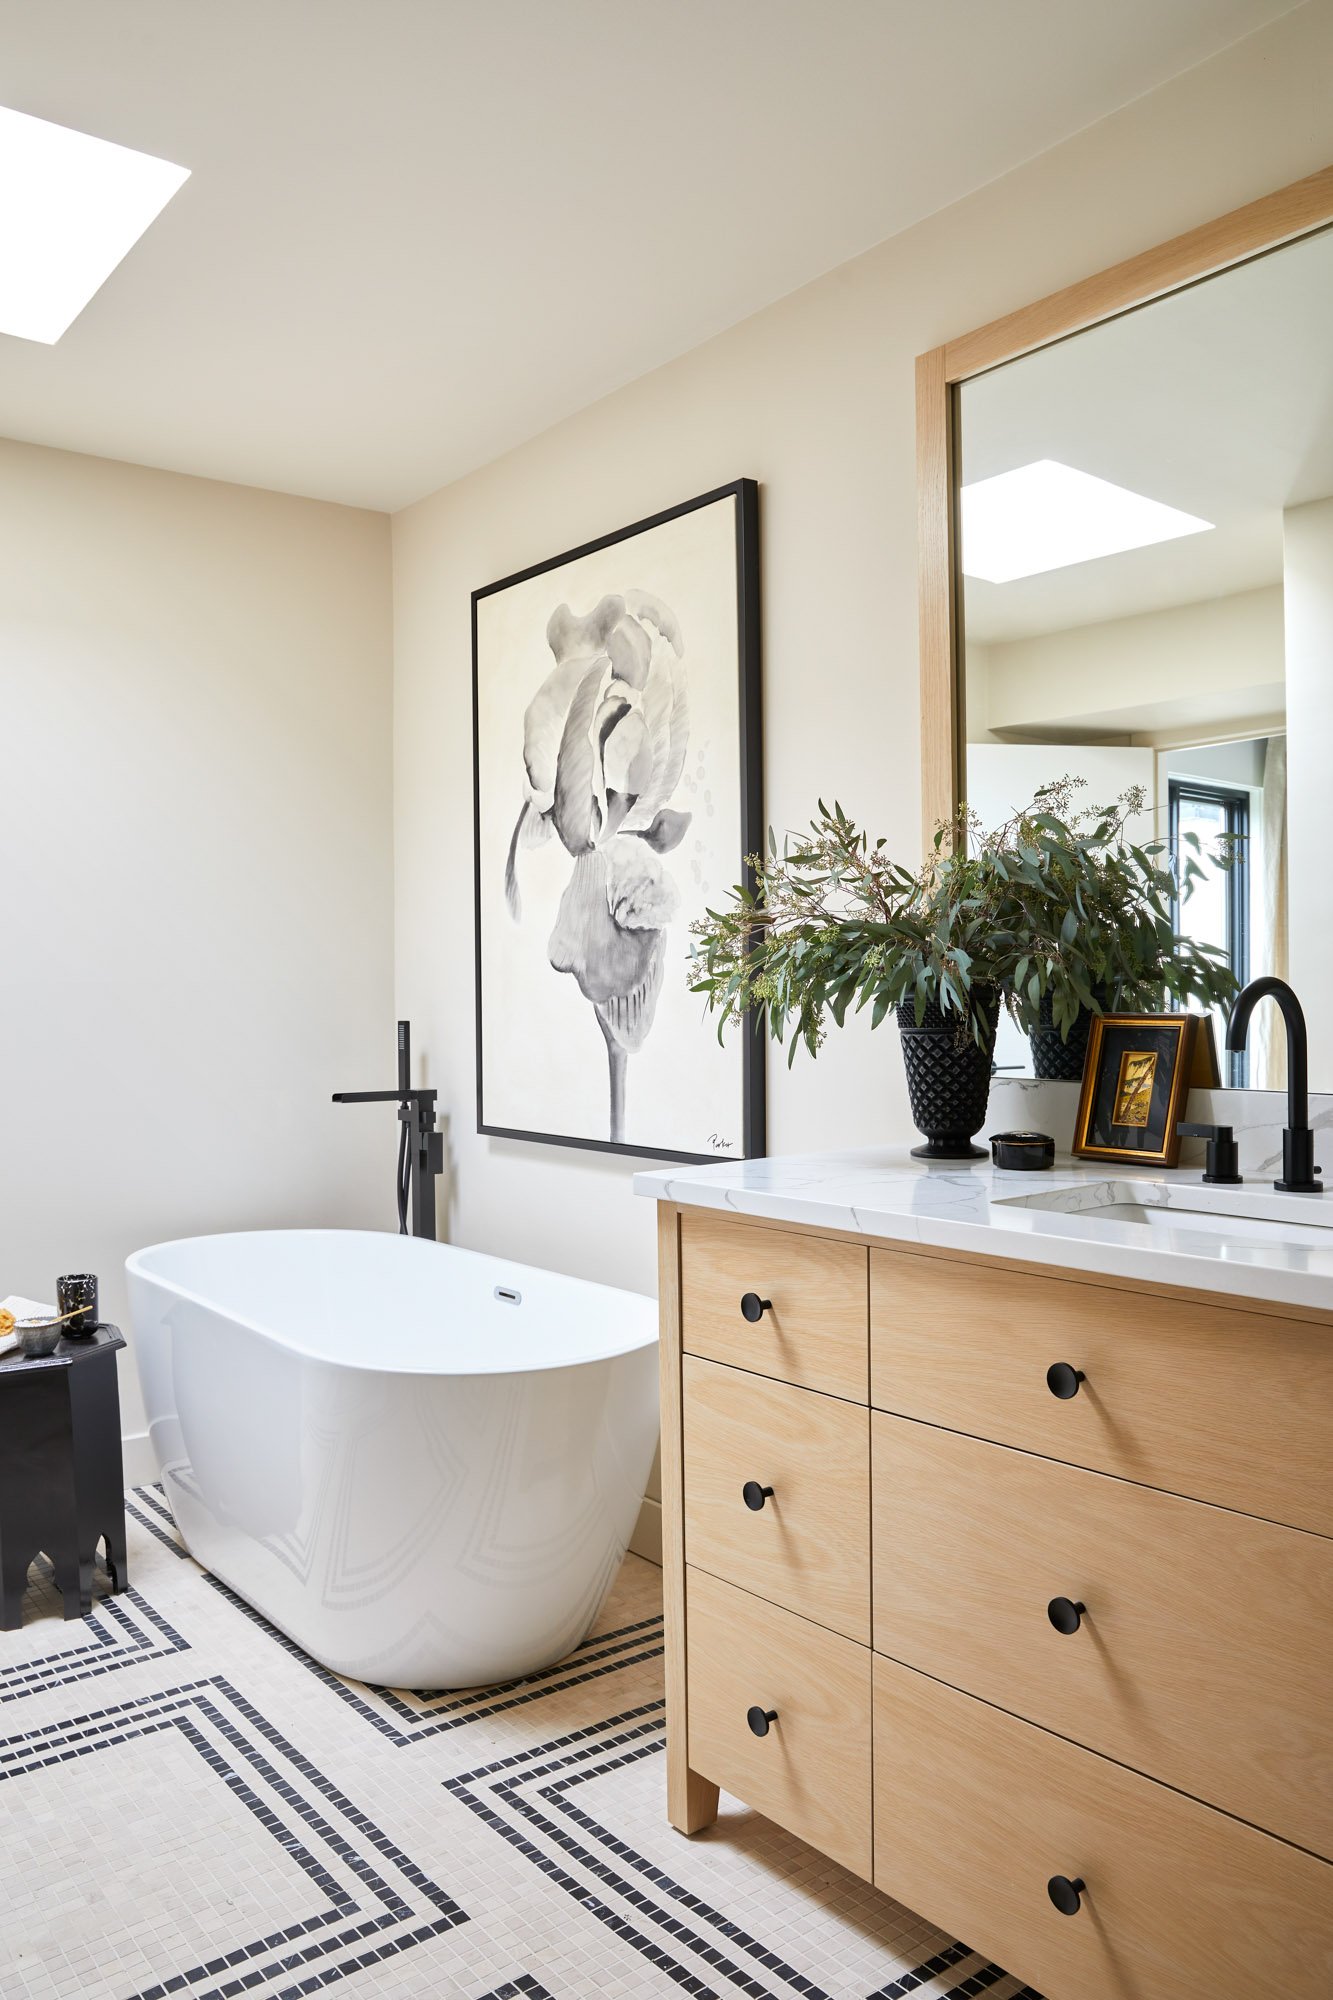 Valerie_Morisset_Interior_Design_Bathroom Vanity_Montreal_Quebec_Canada_Senneville_21008_LR.jpg